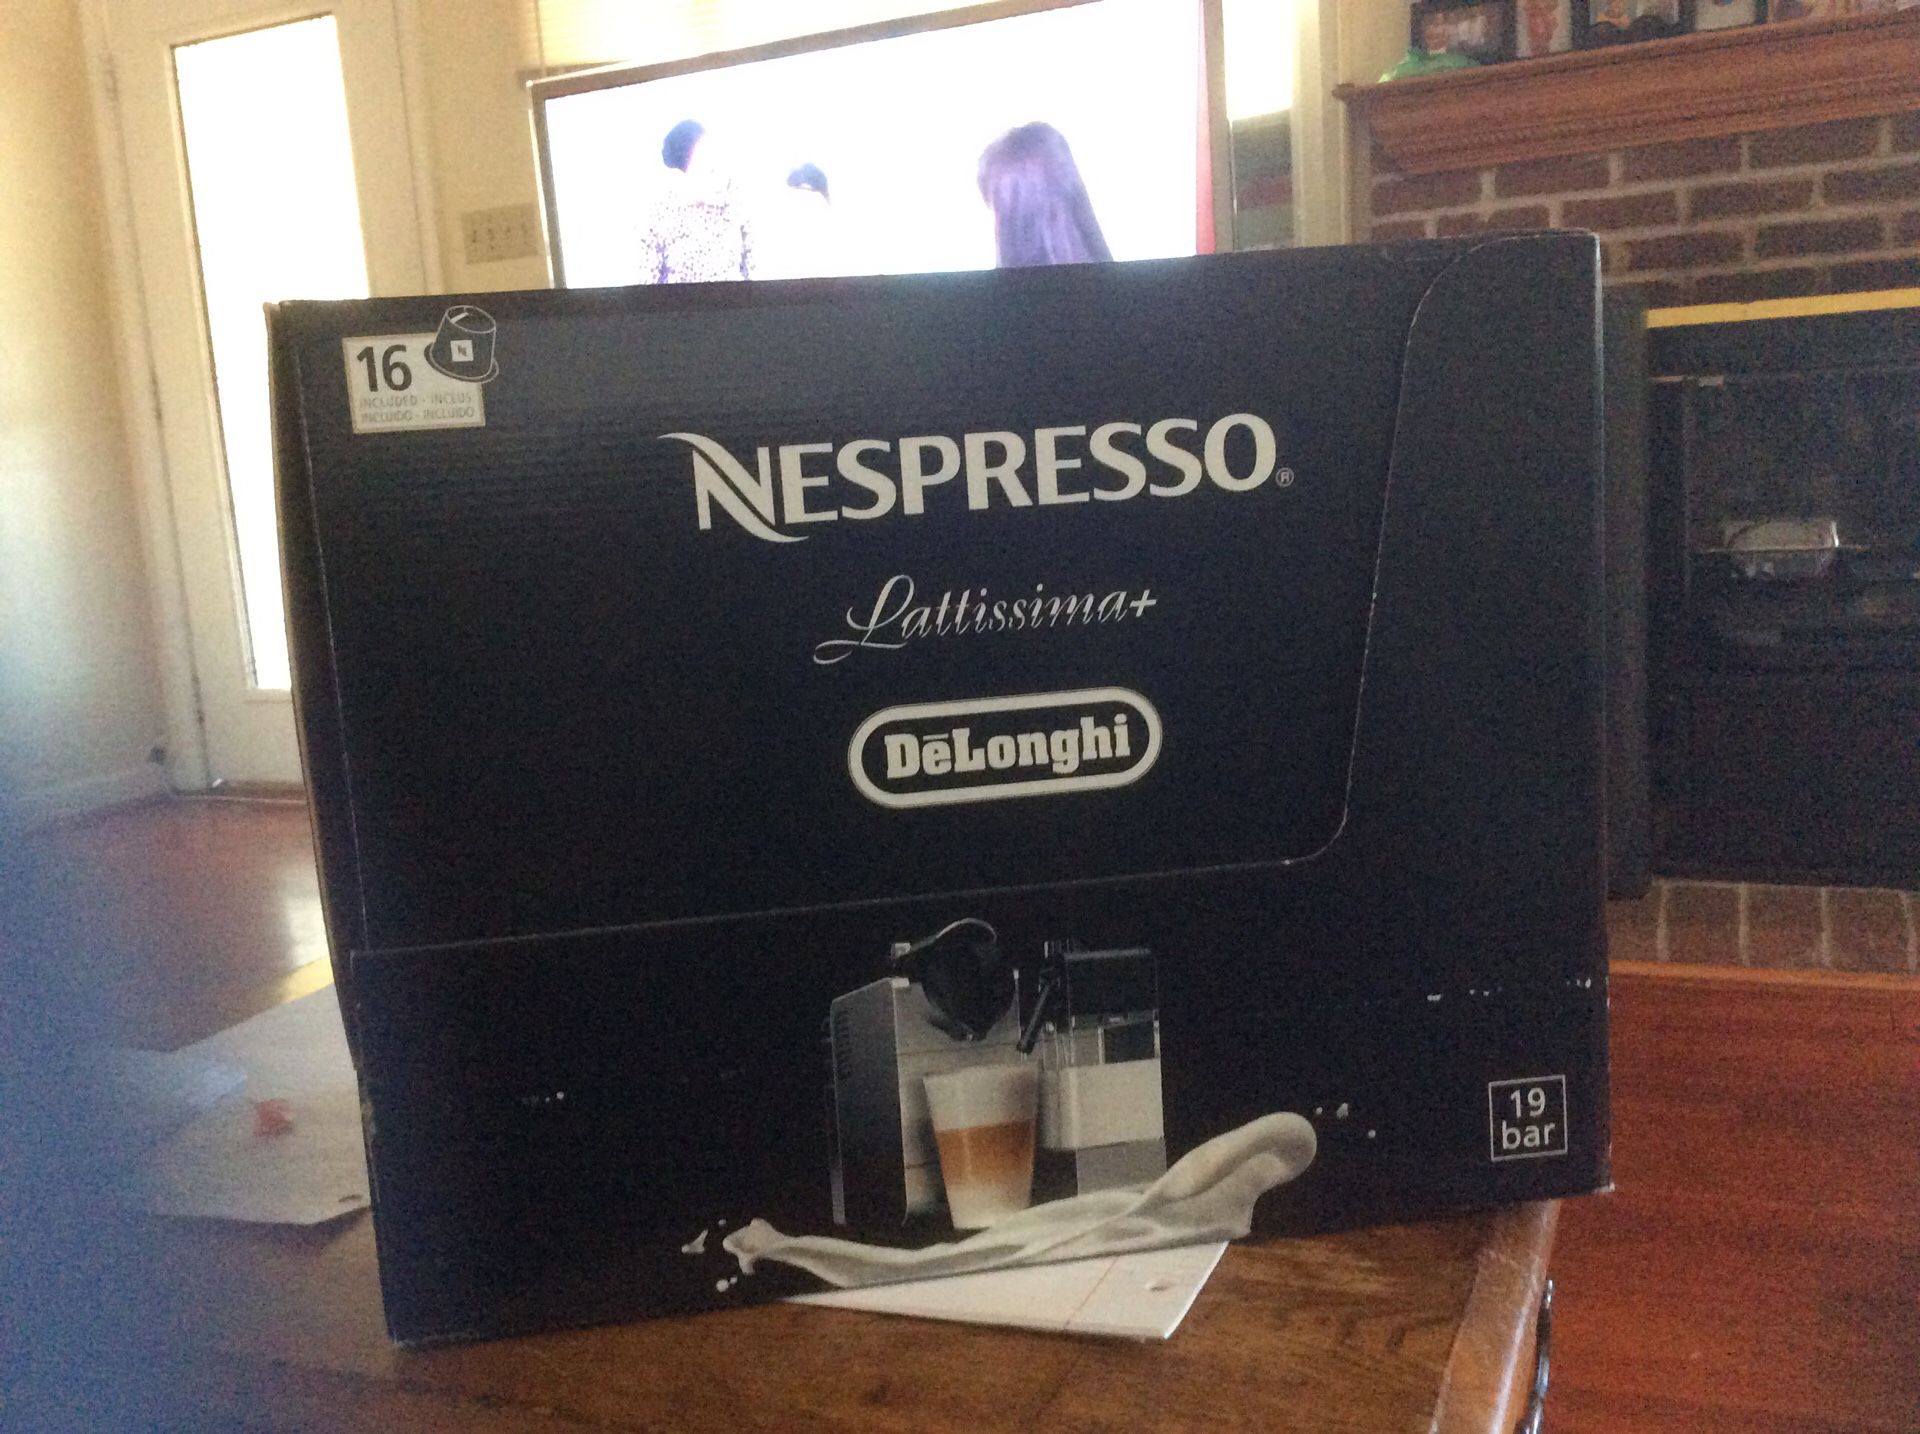 Nespresso Lattissima 19 bar coffees machine ( Brand news) never opened boxes 📦